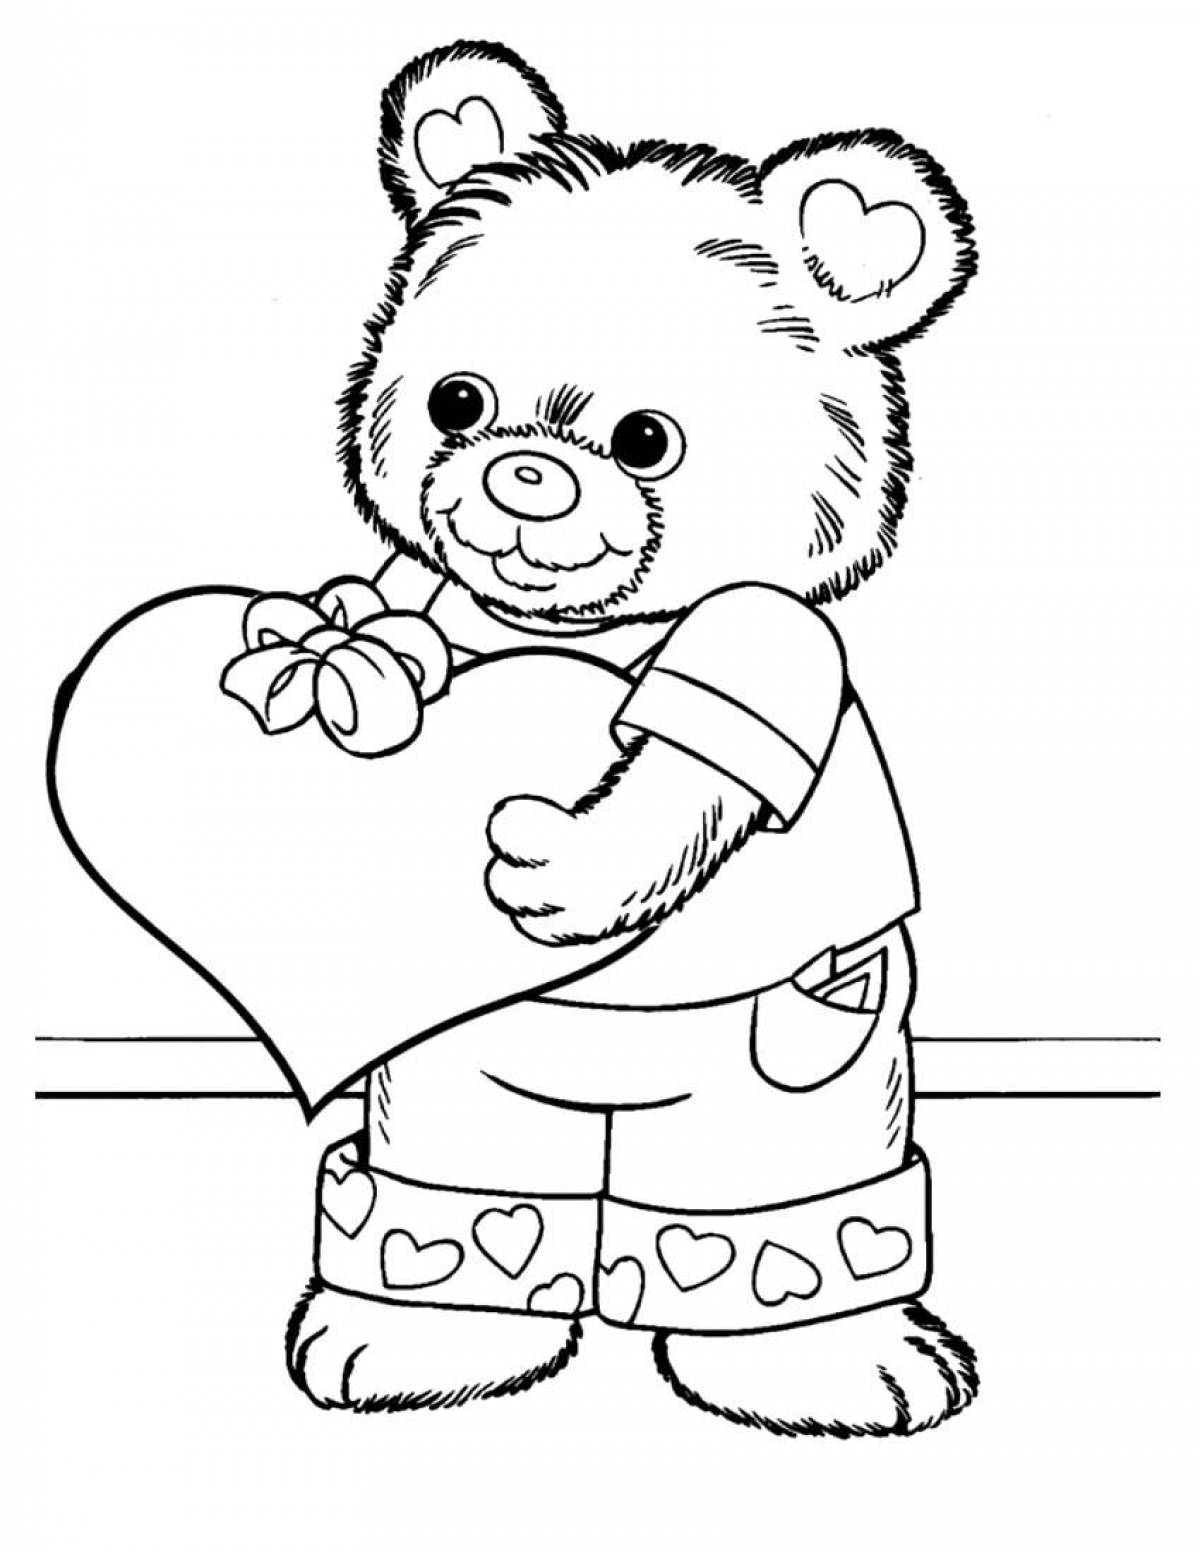 Teddy bear bright coloring